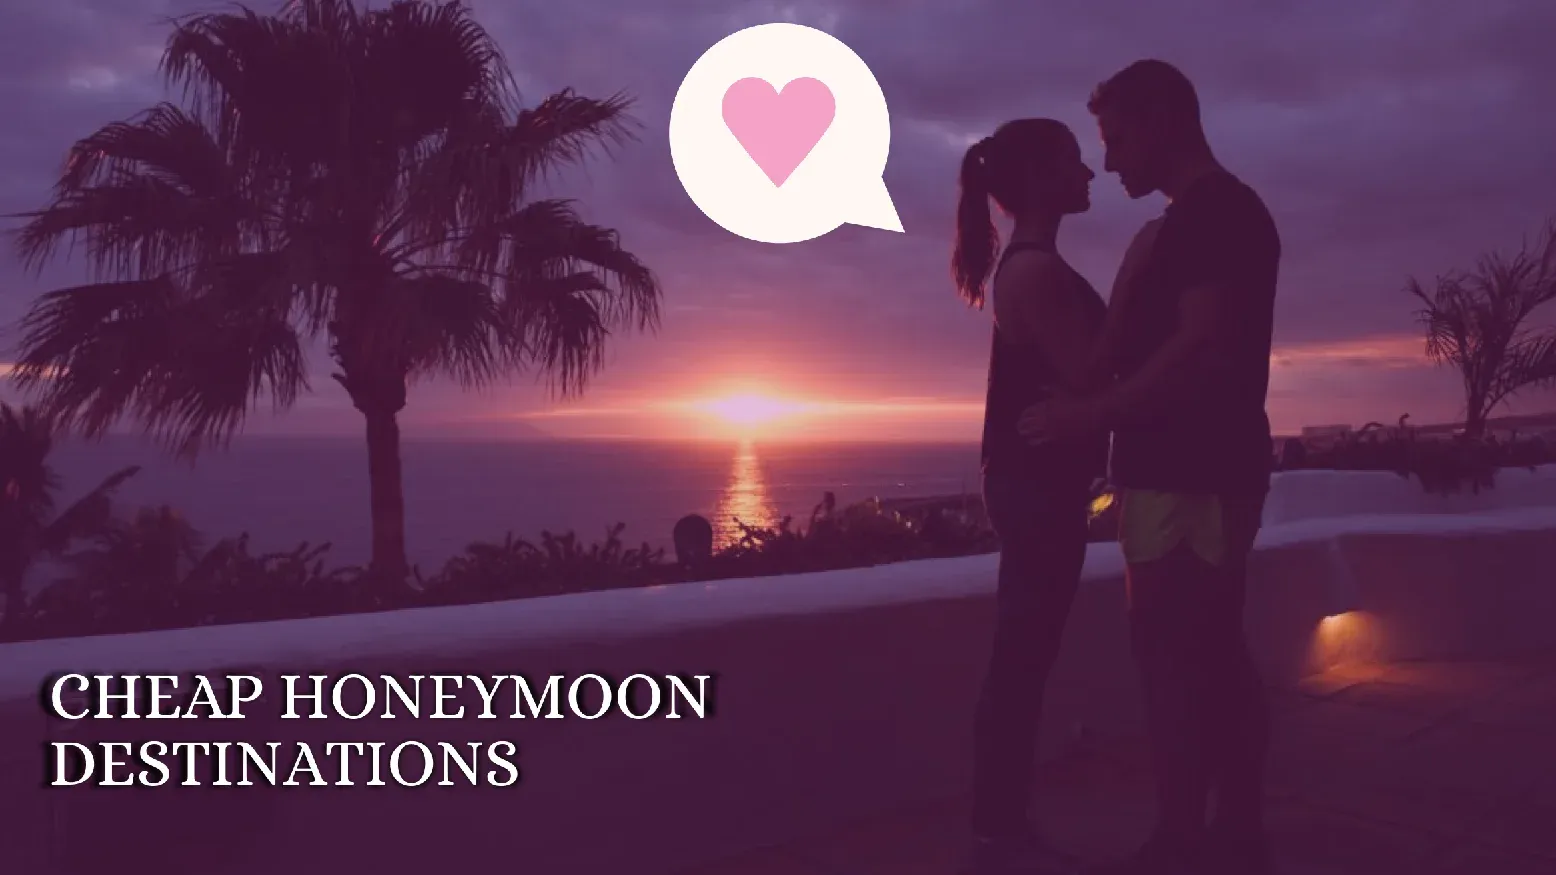 Honeymoon Destinations Ideas On A Budget